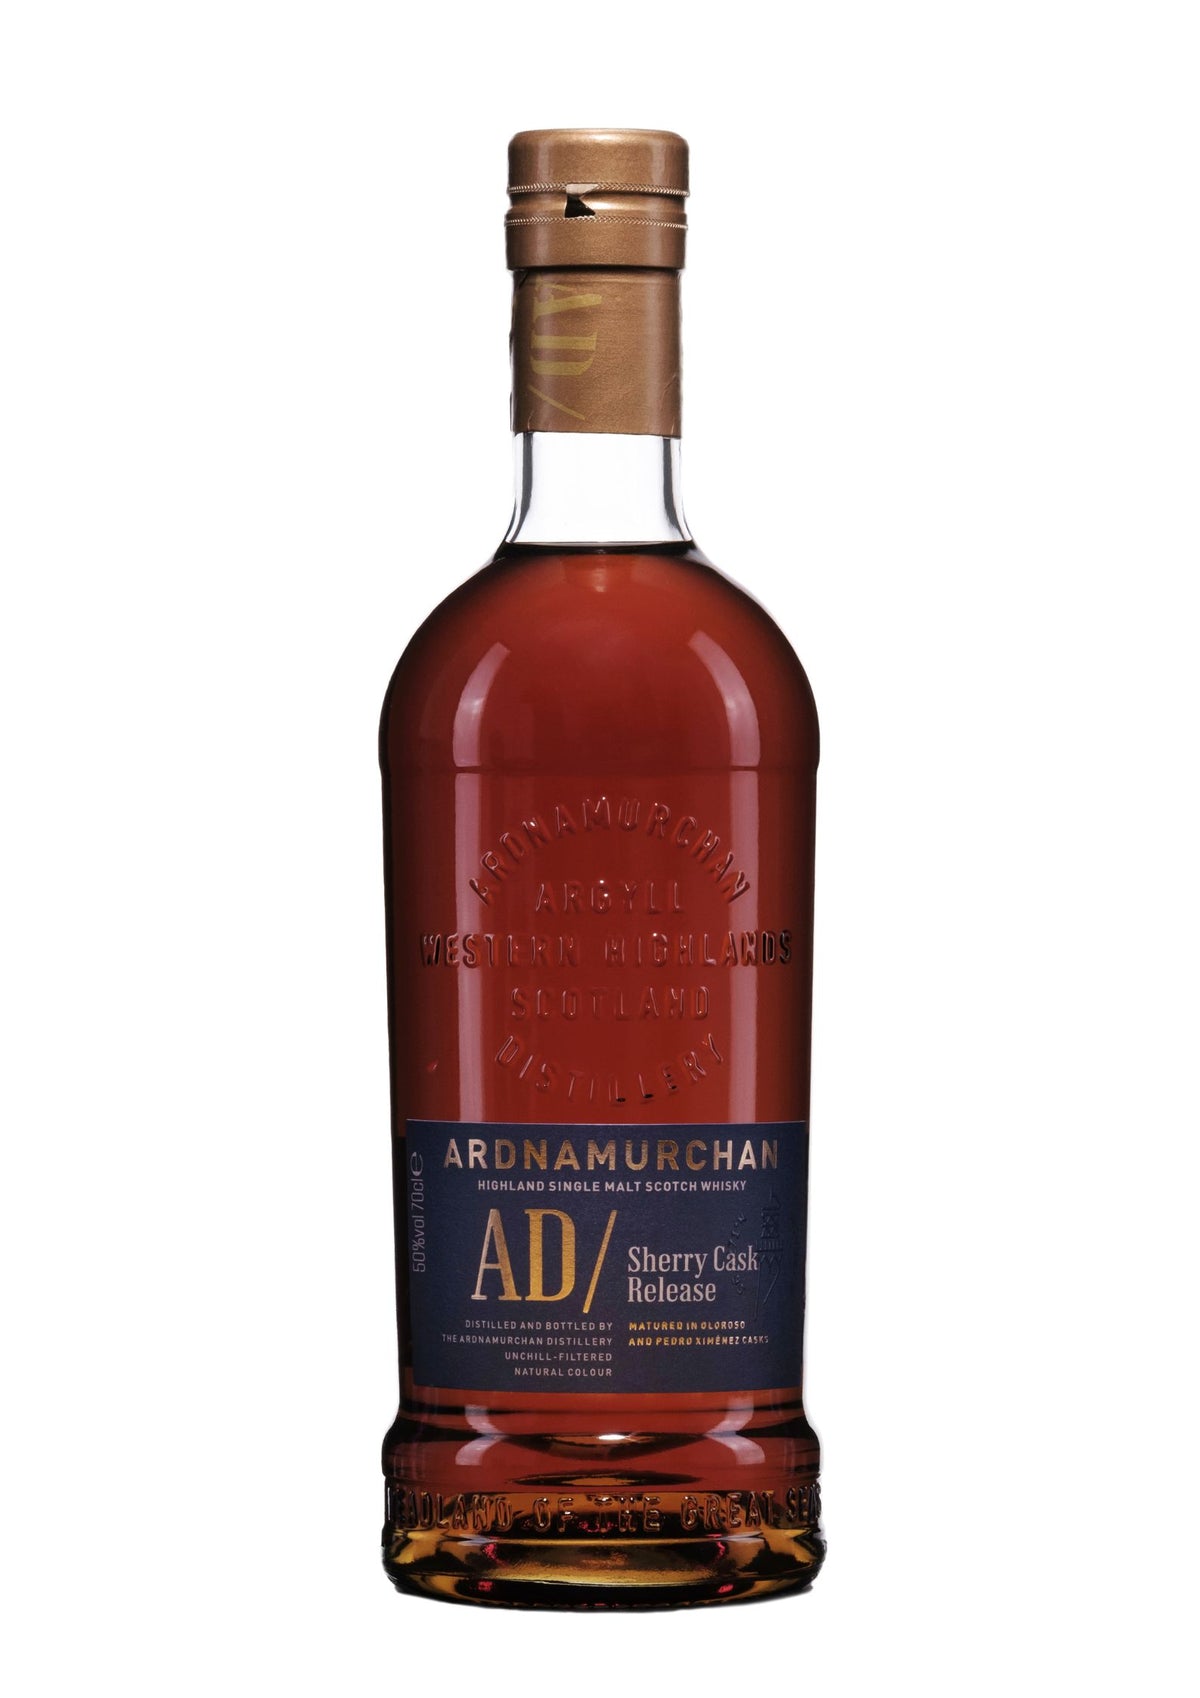 Ardnamurchan AD/ Sherry Cask Release Single Malt Scotch Whisky, 50%